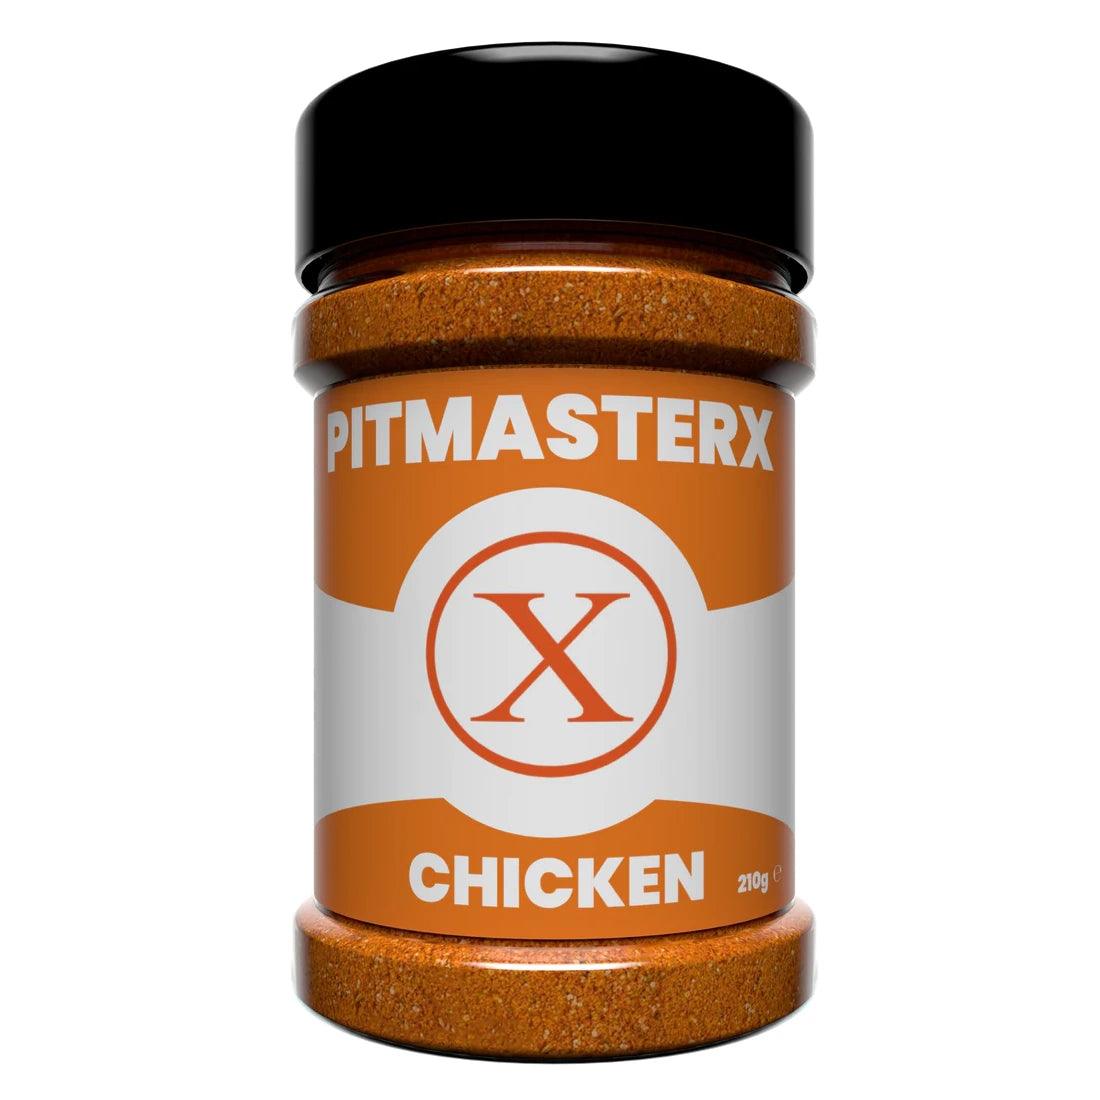 PitmasterX Signature Chicken Rub 210g - BBQ Land